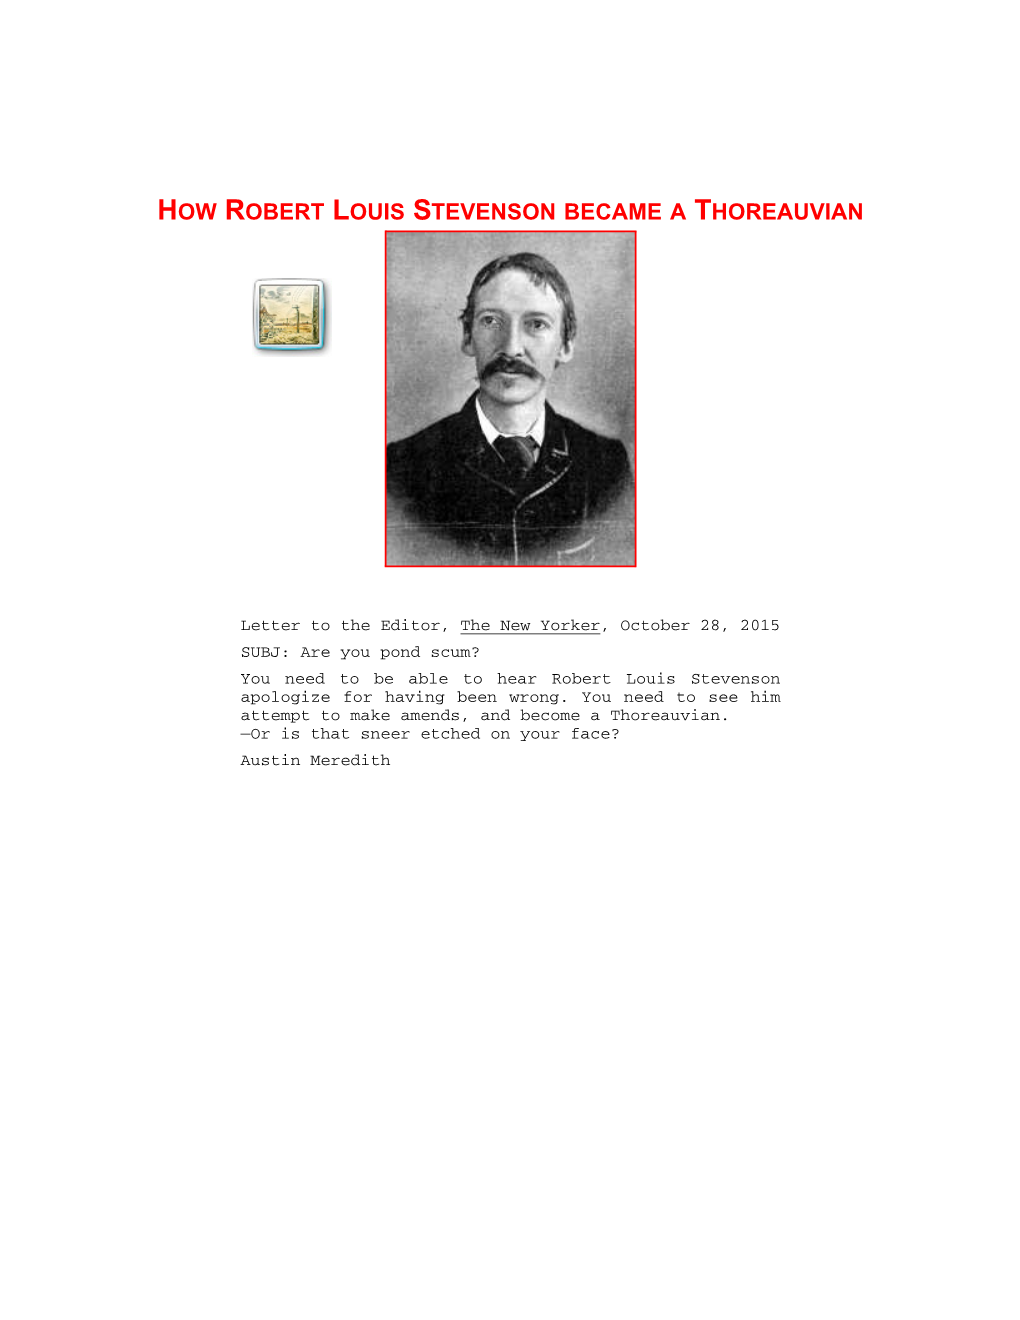 Robert Louis Stevenson Became a Thoreauvian